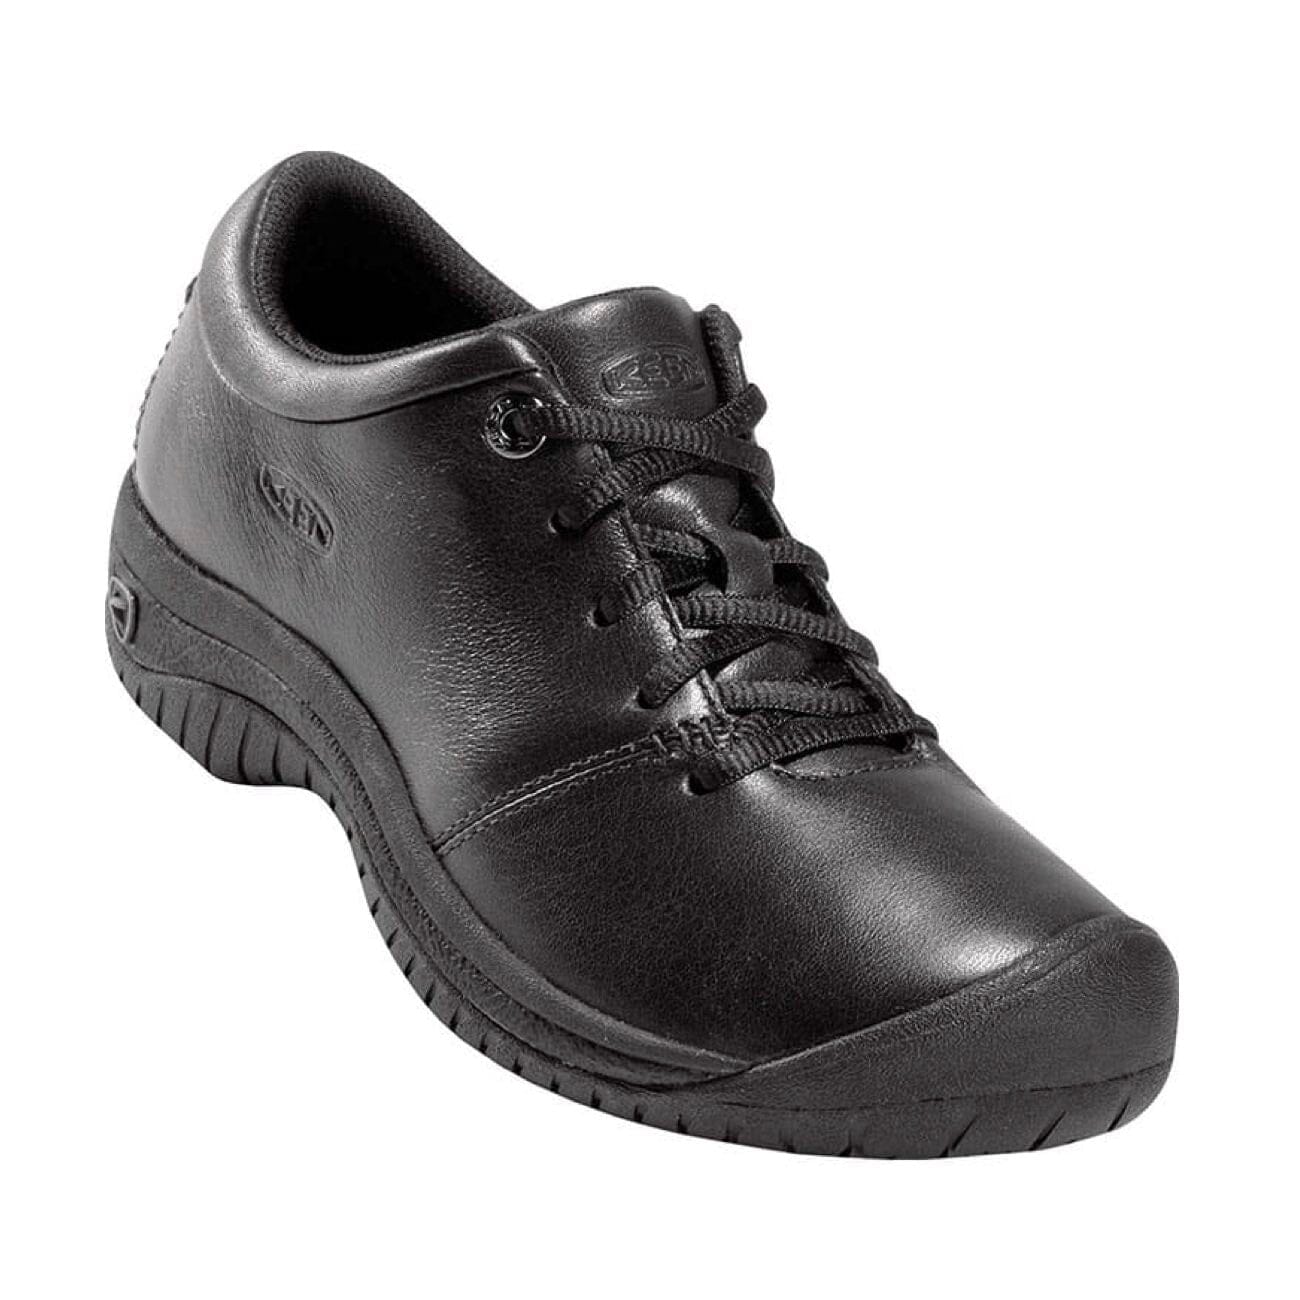 Keen, PTC Oxford, Leather, Women’s, Black Shoes Keen Black 7.5 